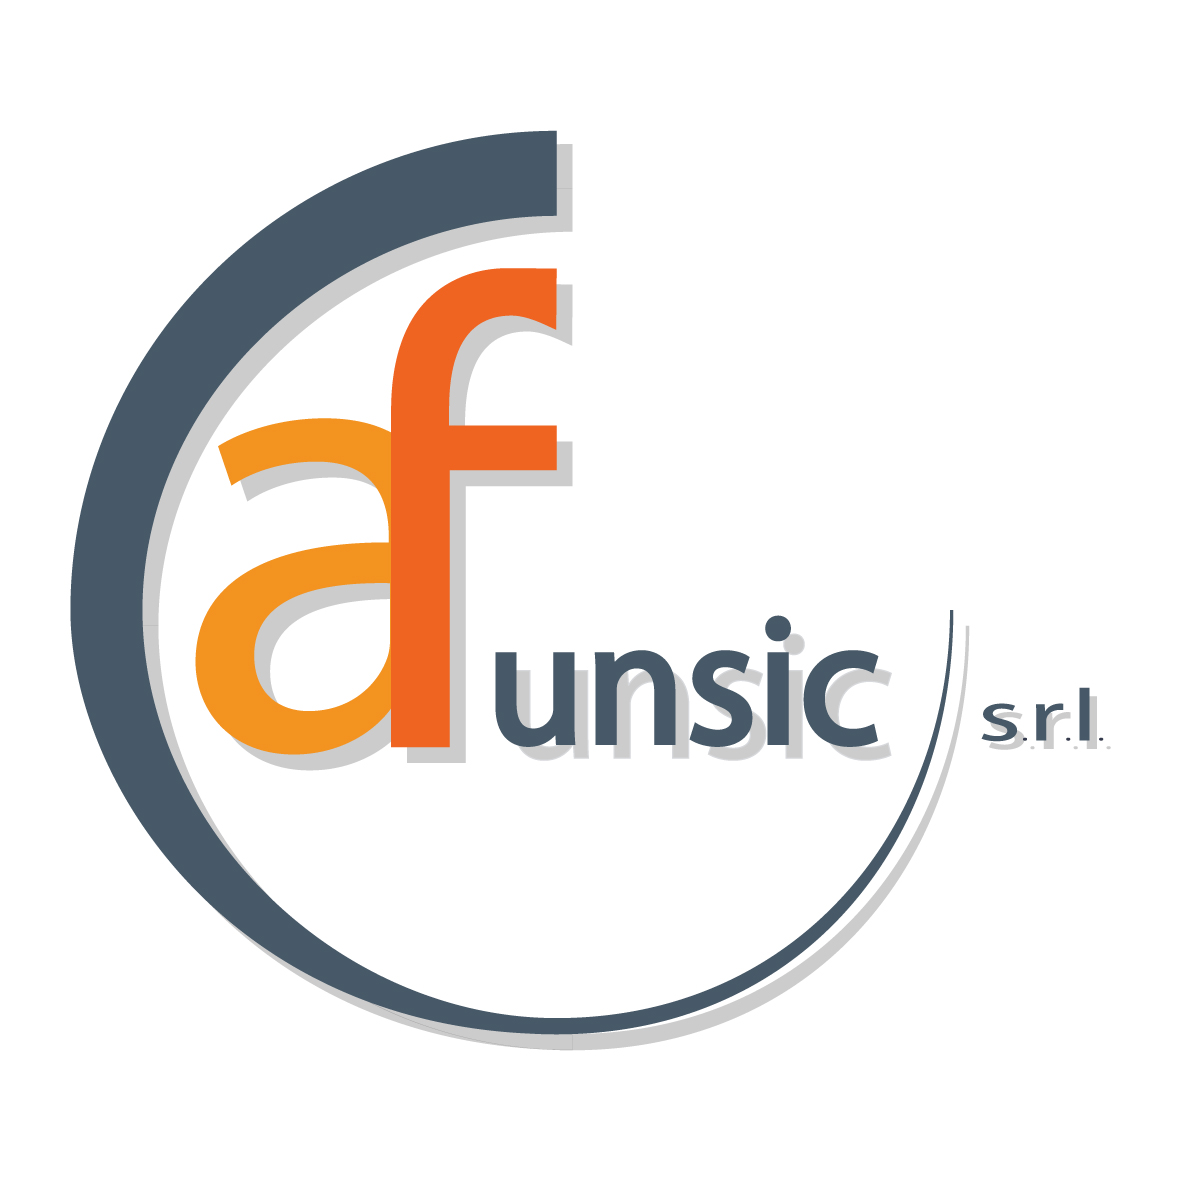 Caf Unsic Logo photo - 1